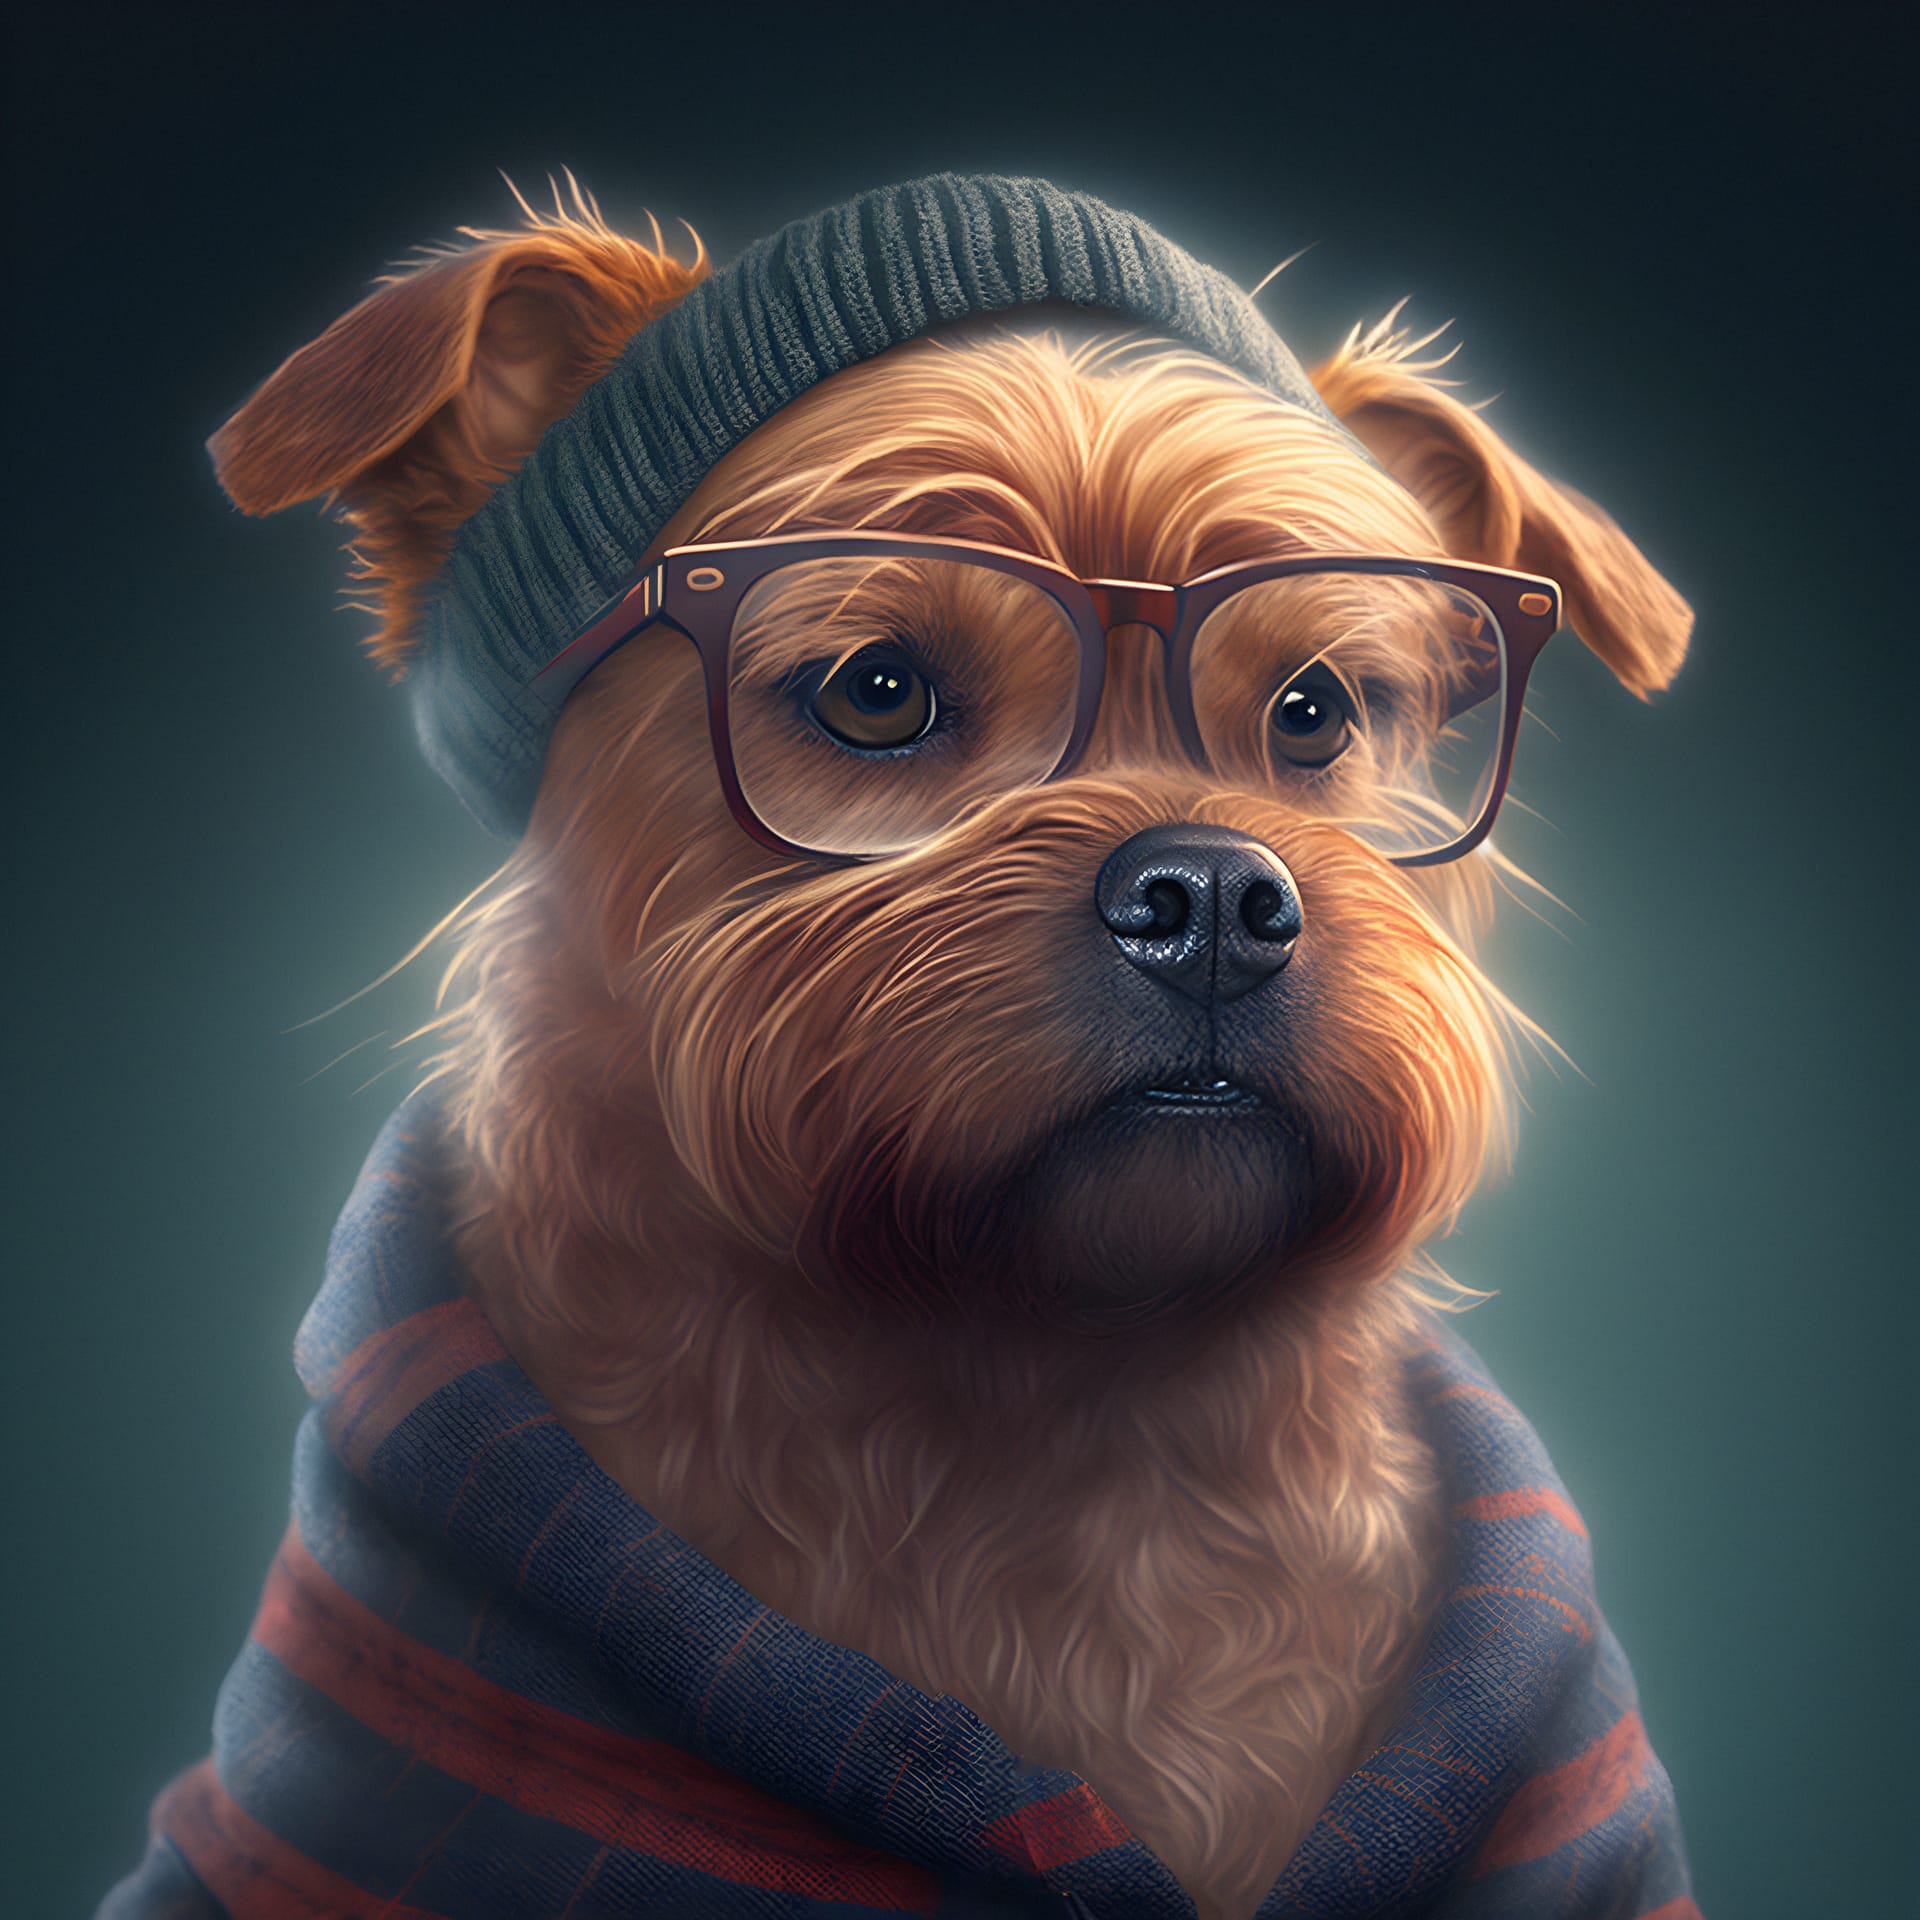 Hipster dog wearing clothes glasses dog portrait image